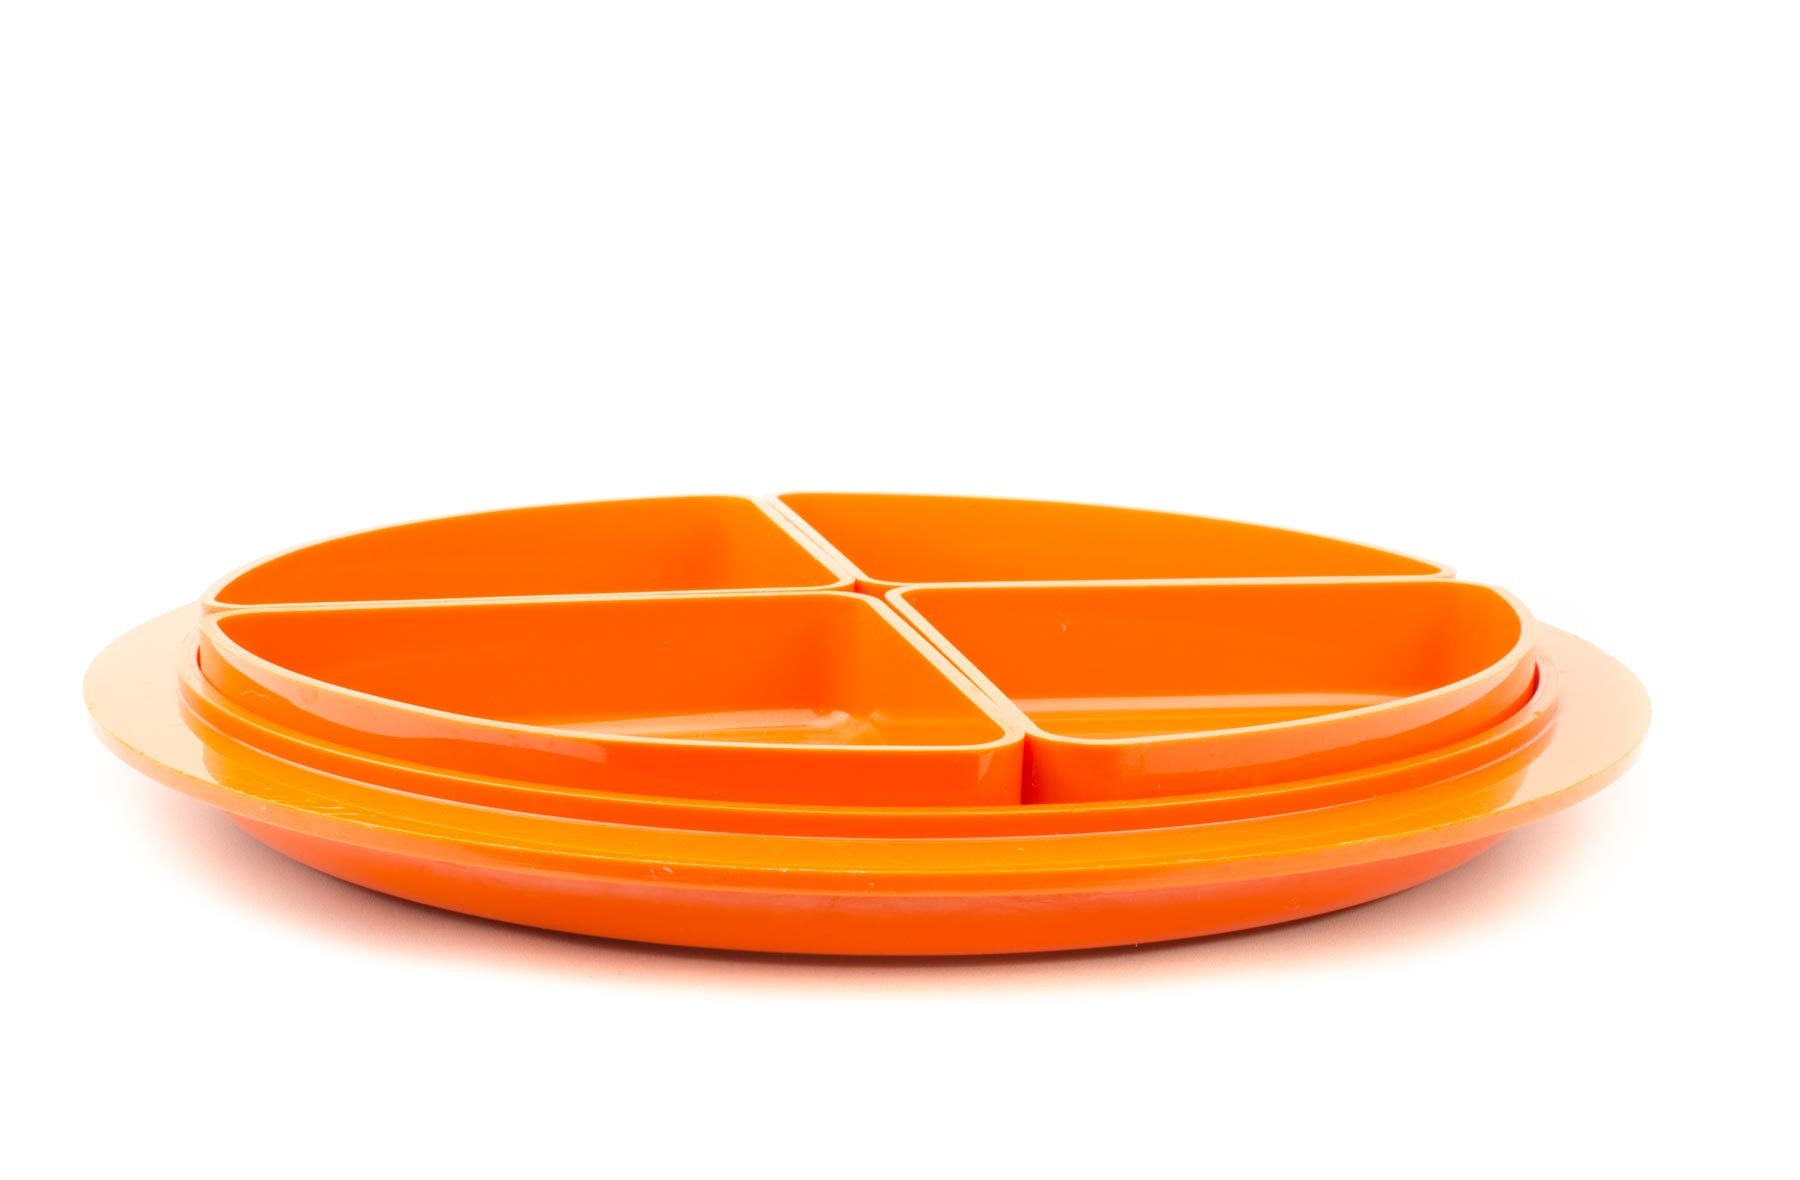 Orange Party Platter Collection IPL Acrylic Party Tray Andre Morin Orange Tray Modular Tray